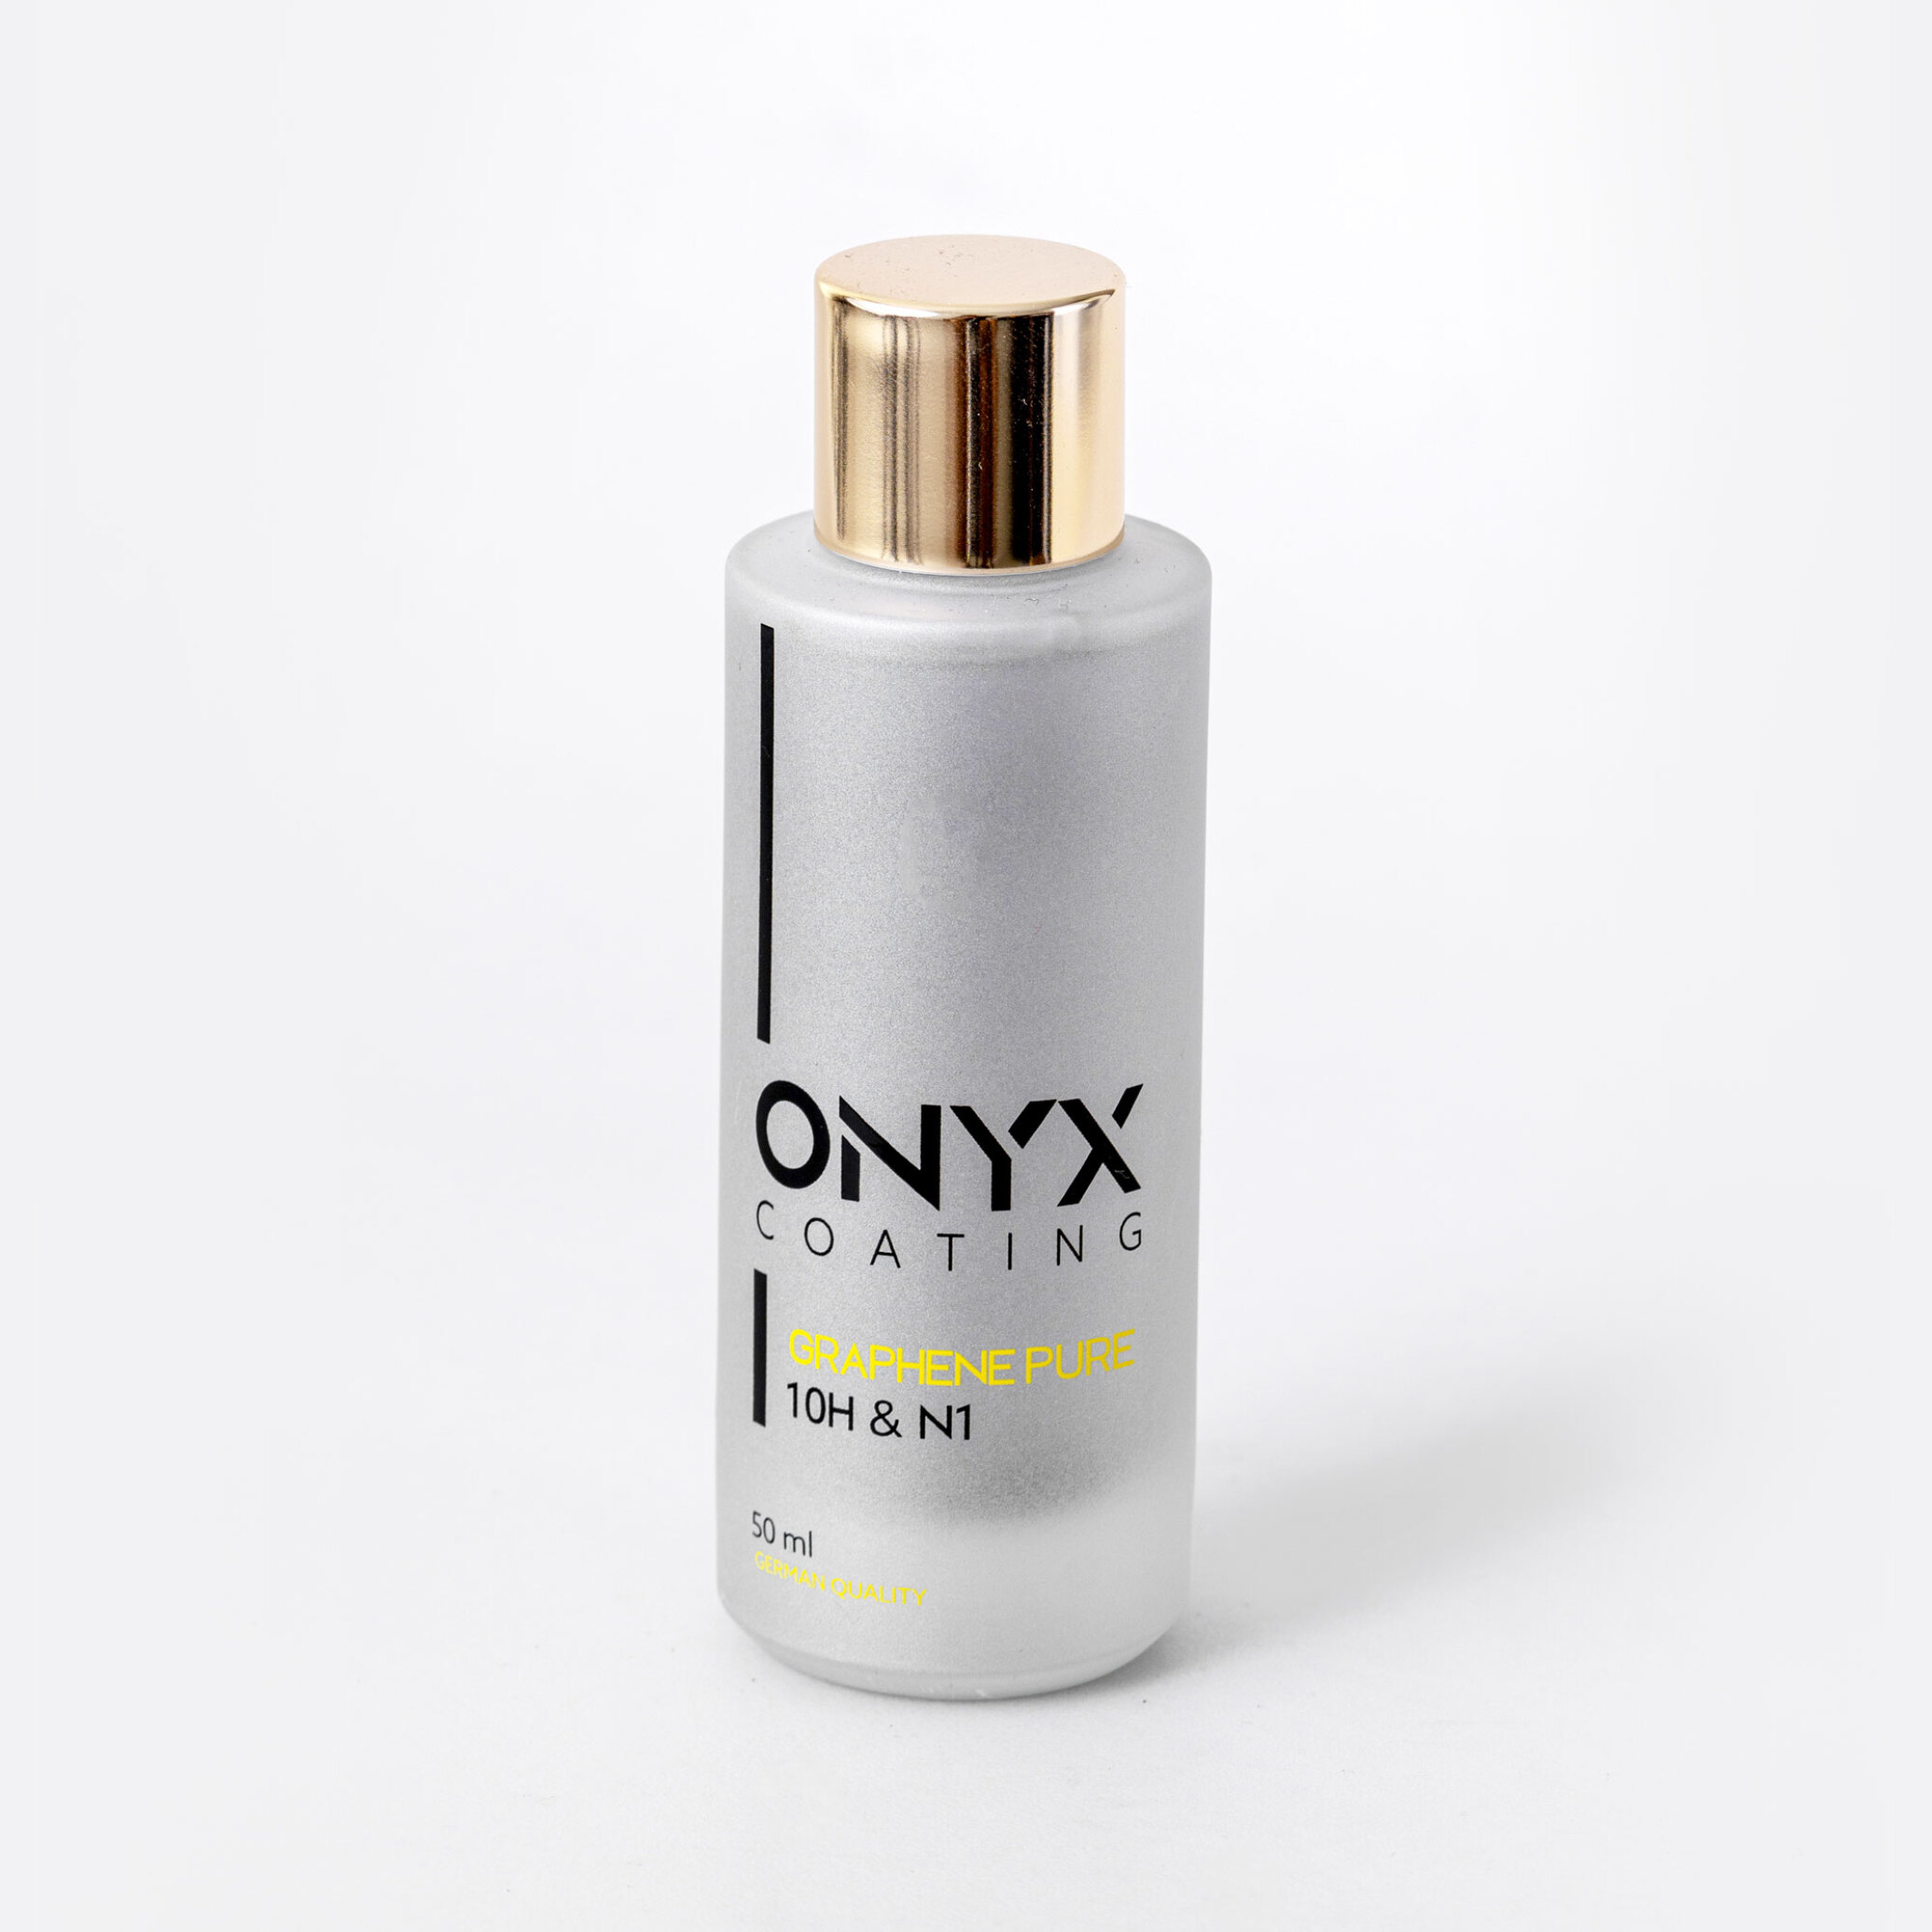  Onyx Graphene Pure 